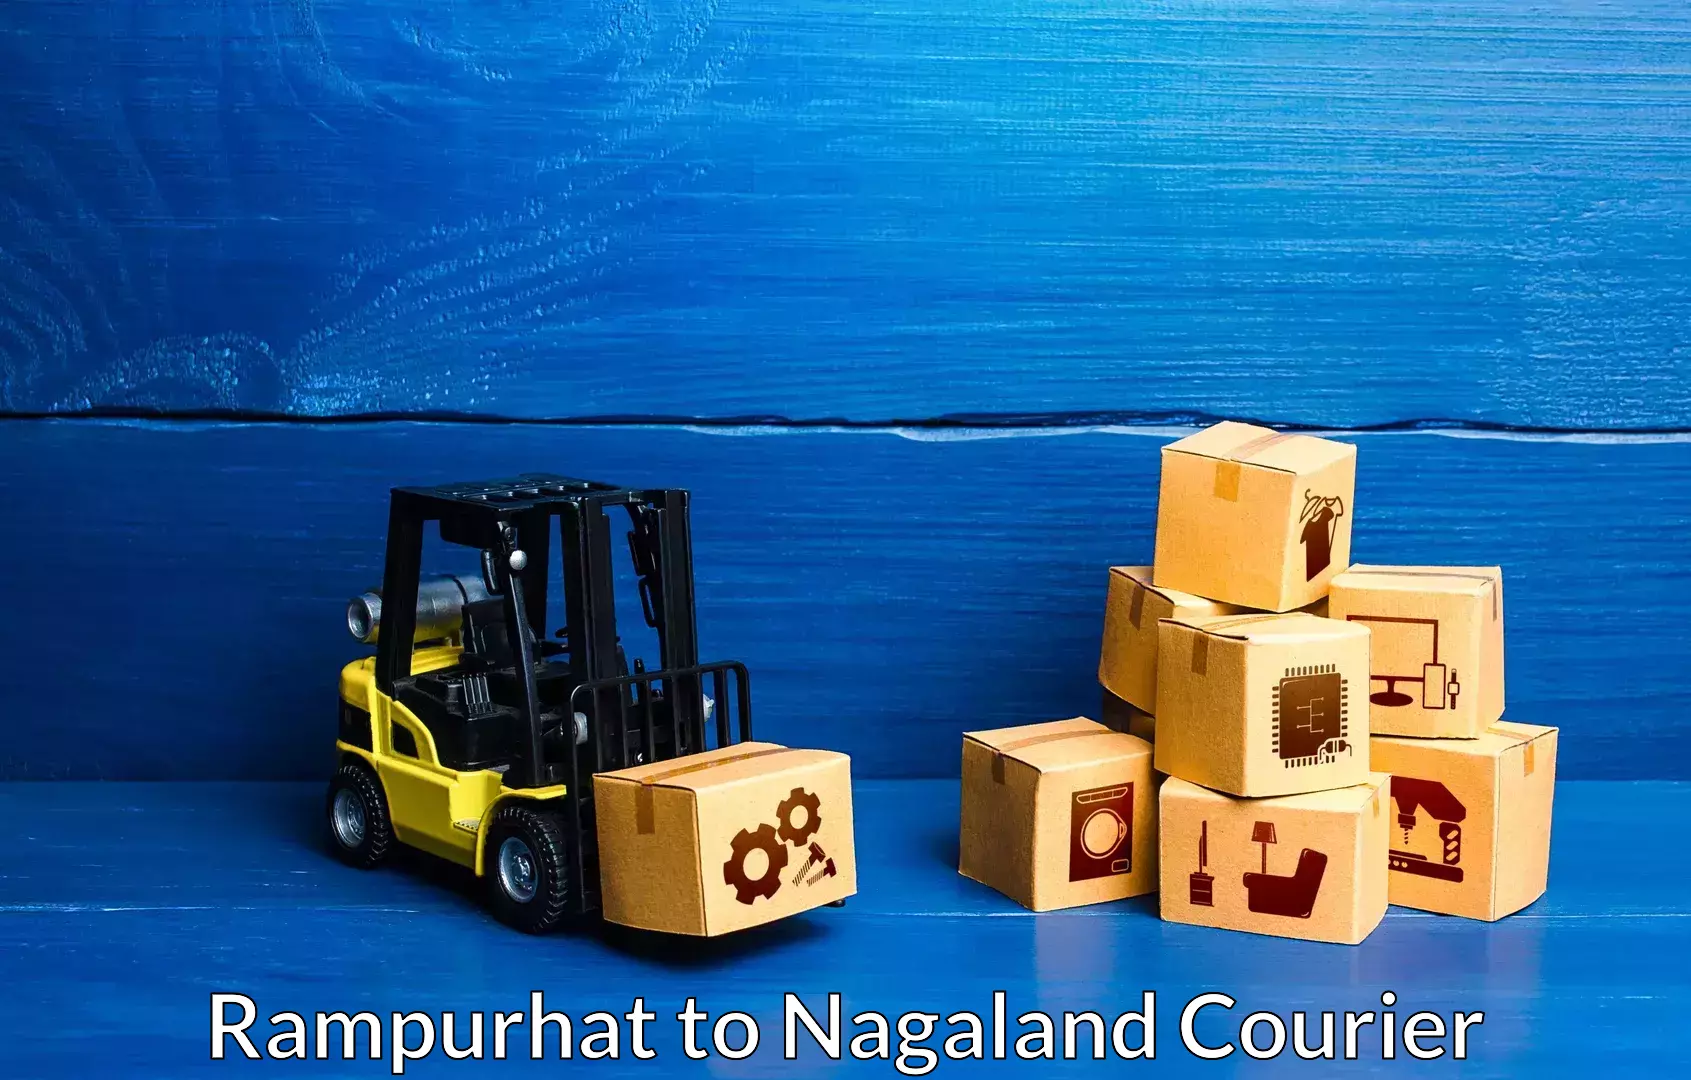 Furniture transport company Rampurhat to Nagaland